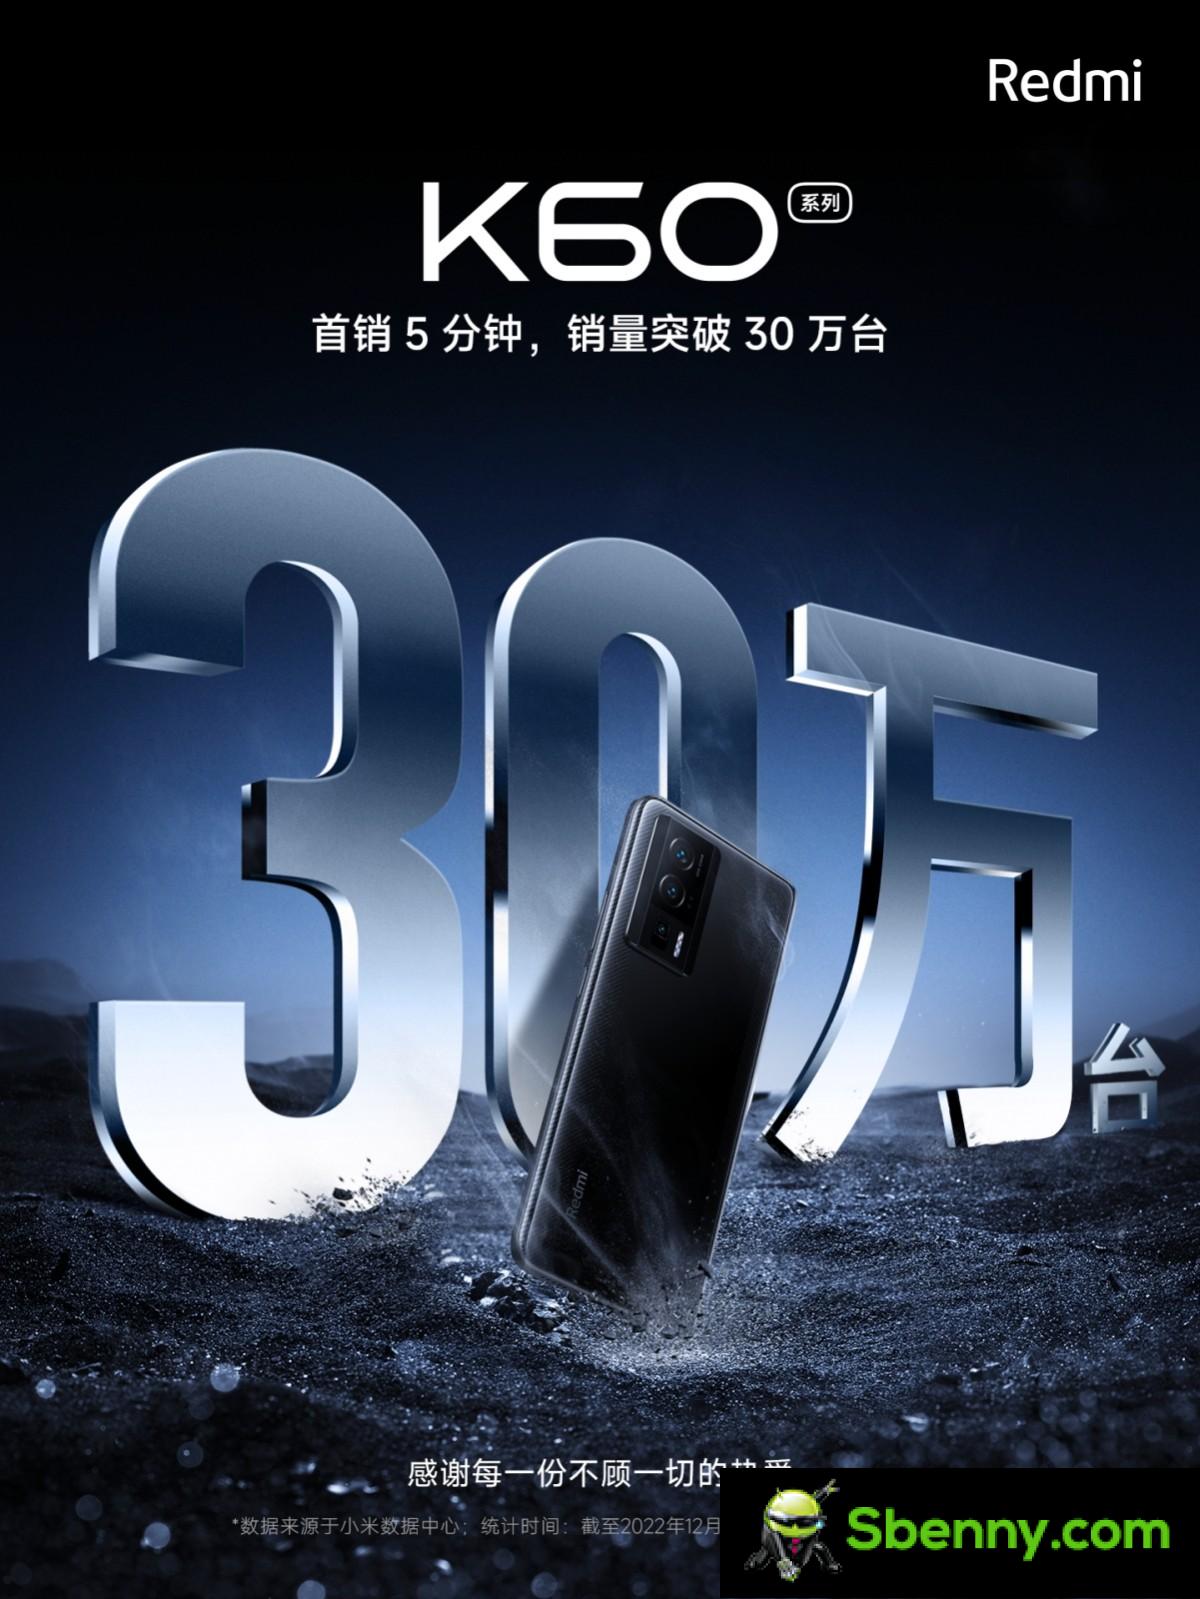 Xiaomi lança 300,000 telefones Redmi K60 em 5 minutos